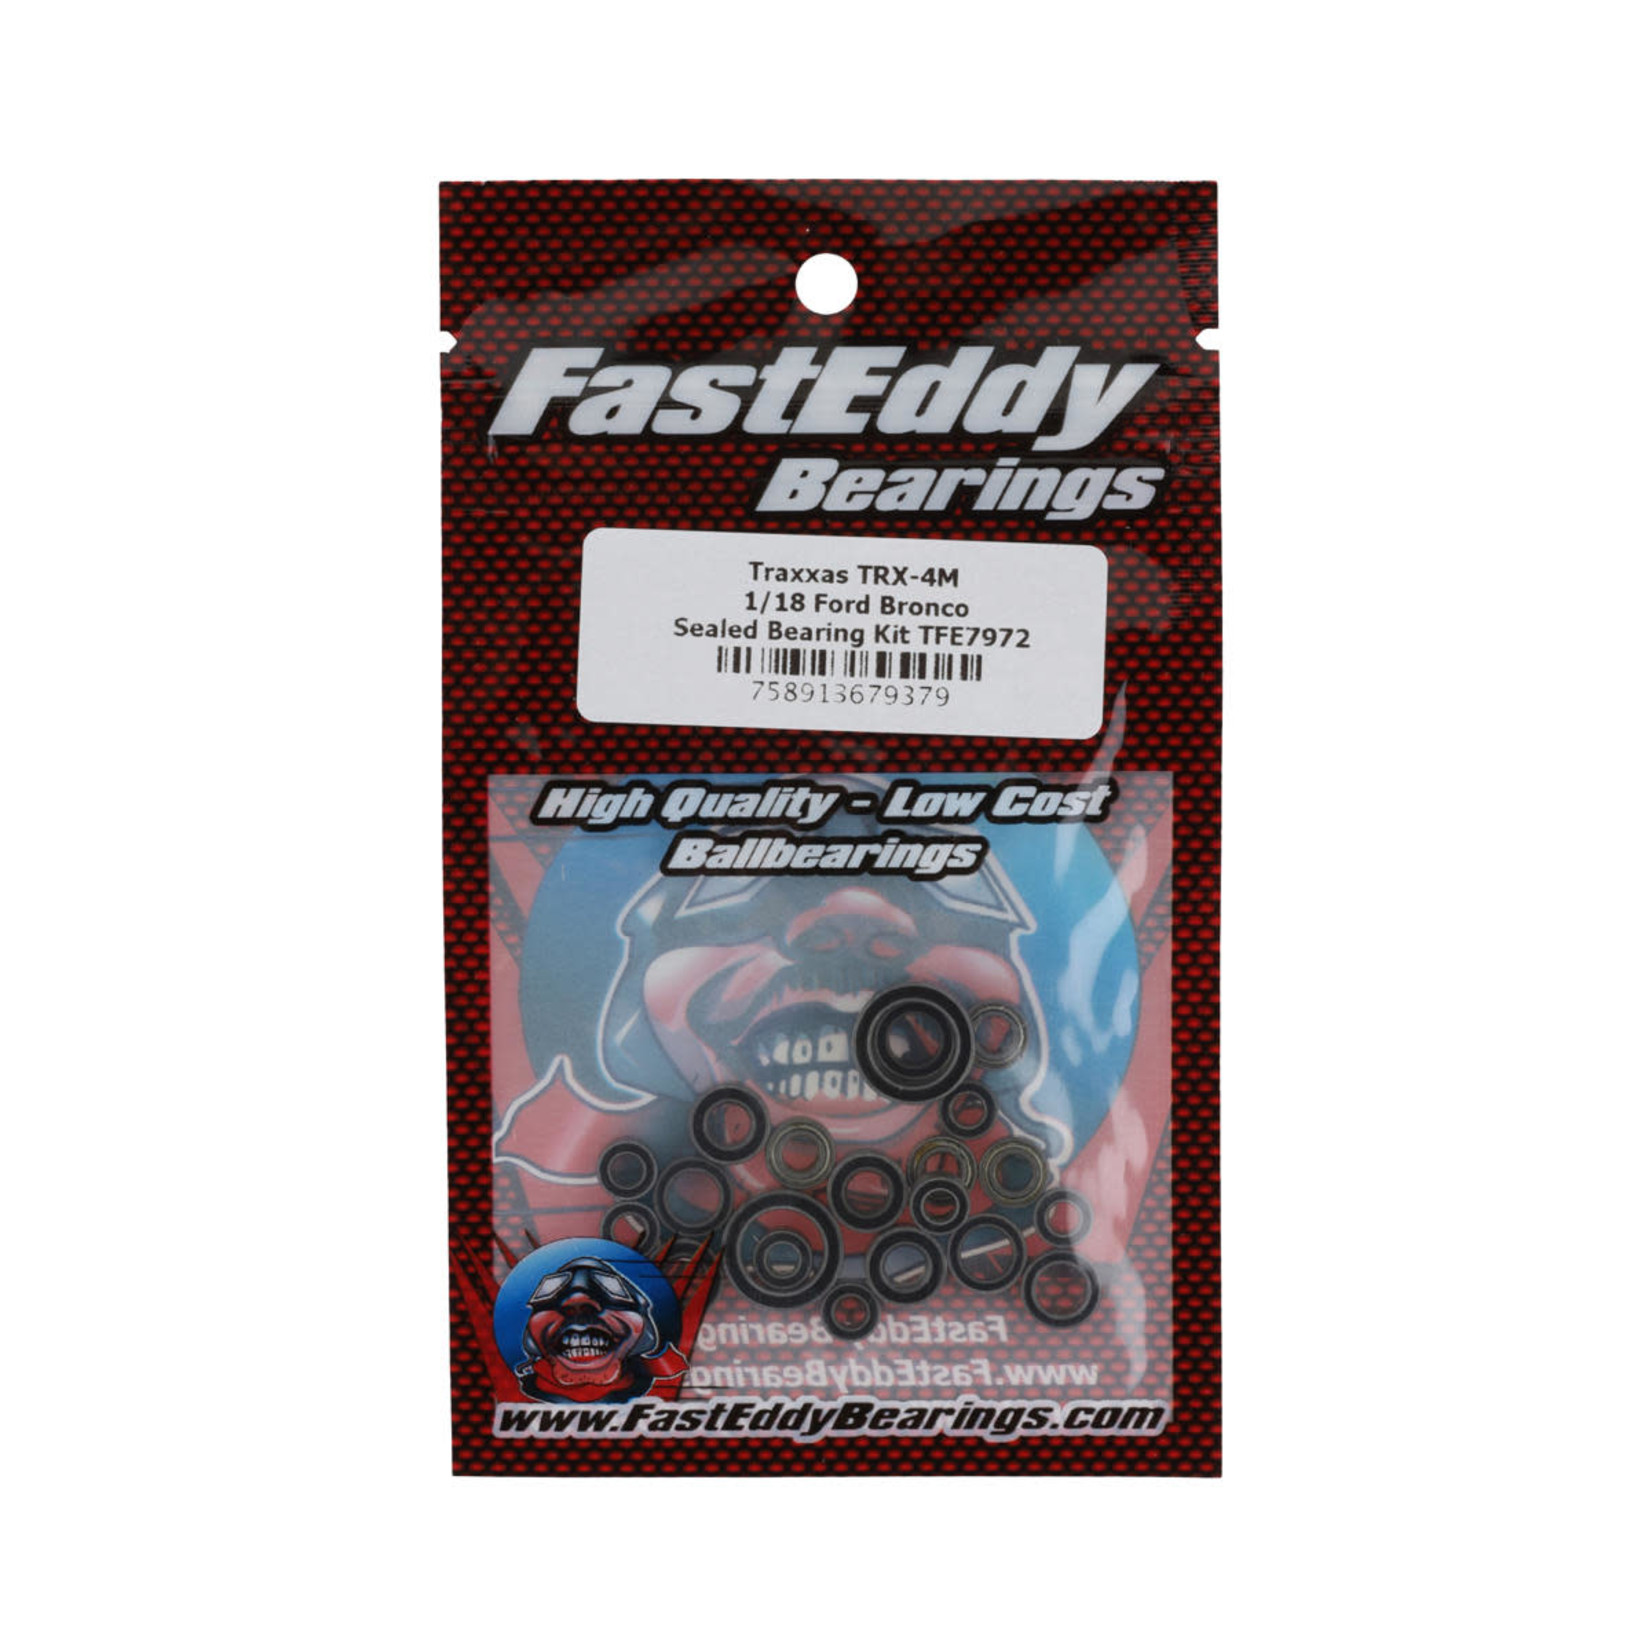 FastEddy FastEddy Traxxas TRX-4M Ford Bronco Bearing Kit #TFE7972